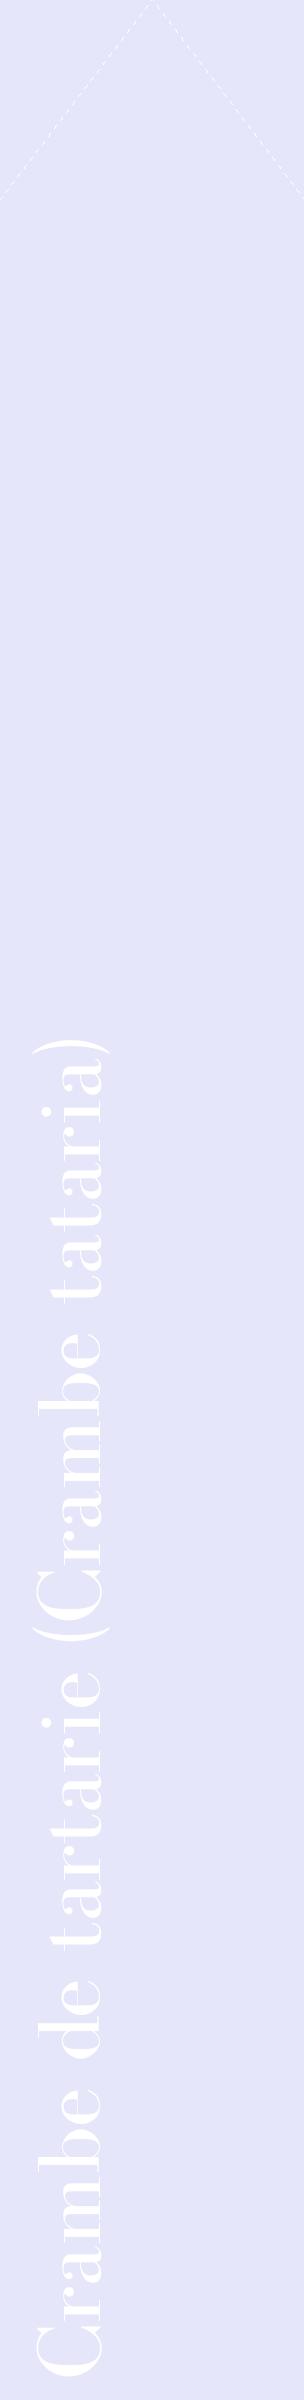 Étiquette de : Crambe tataria - format c - style blanche55_simplebod avec comestibilité